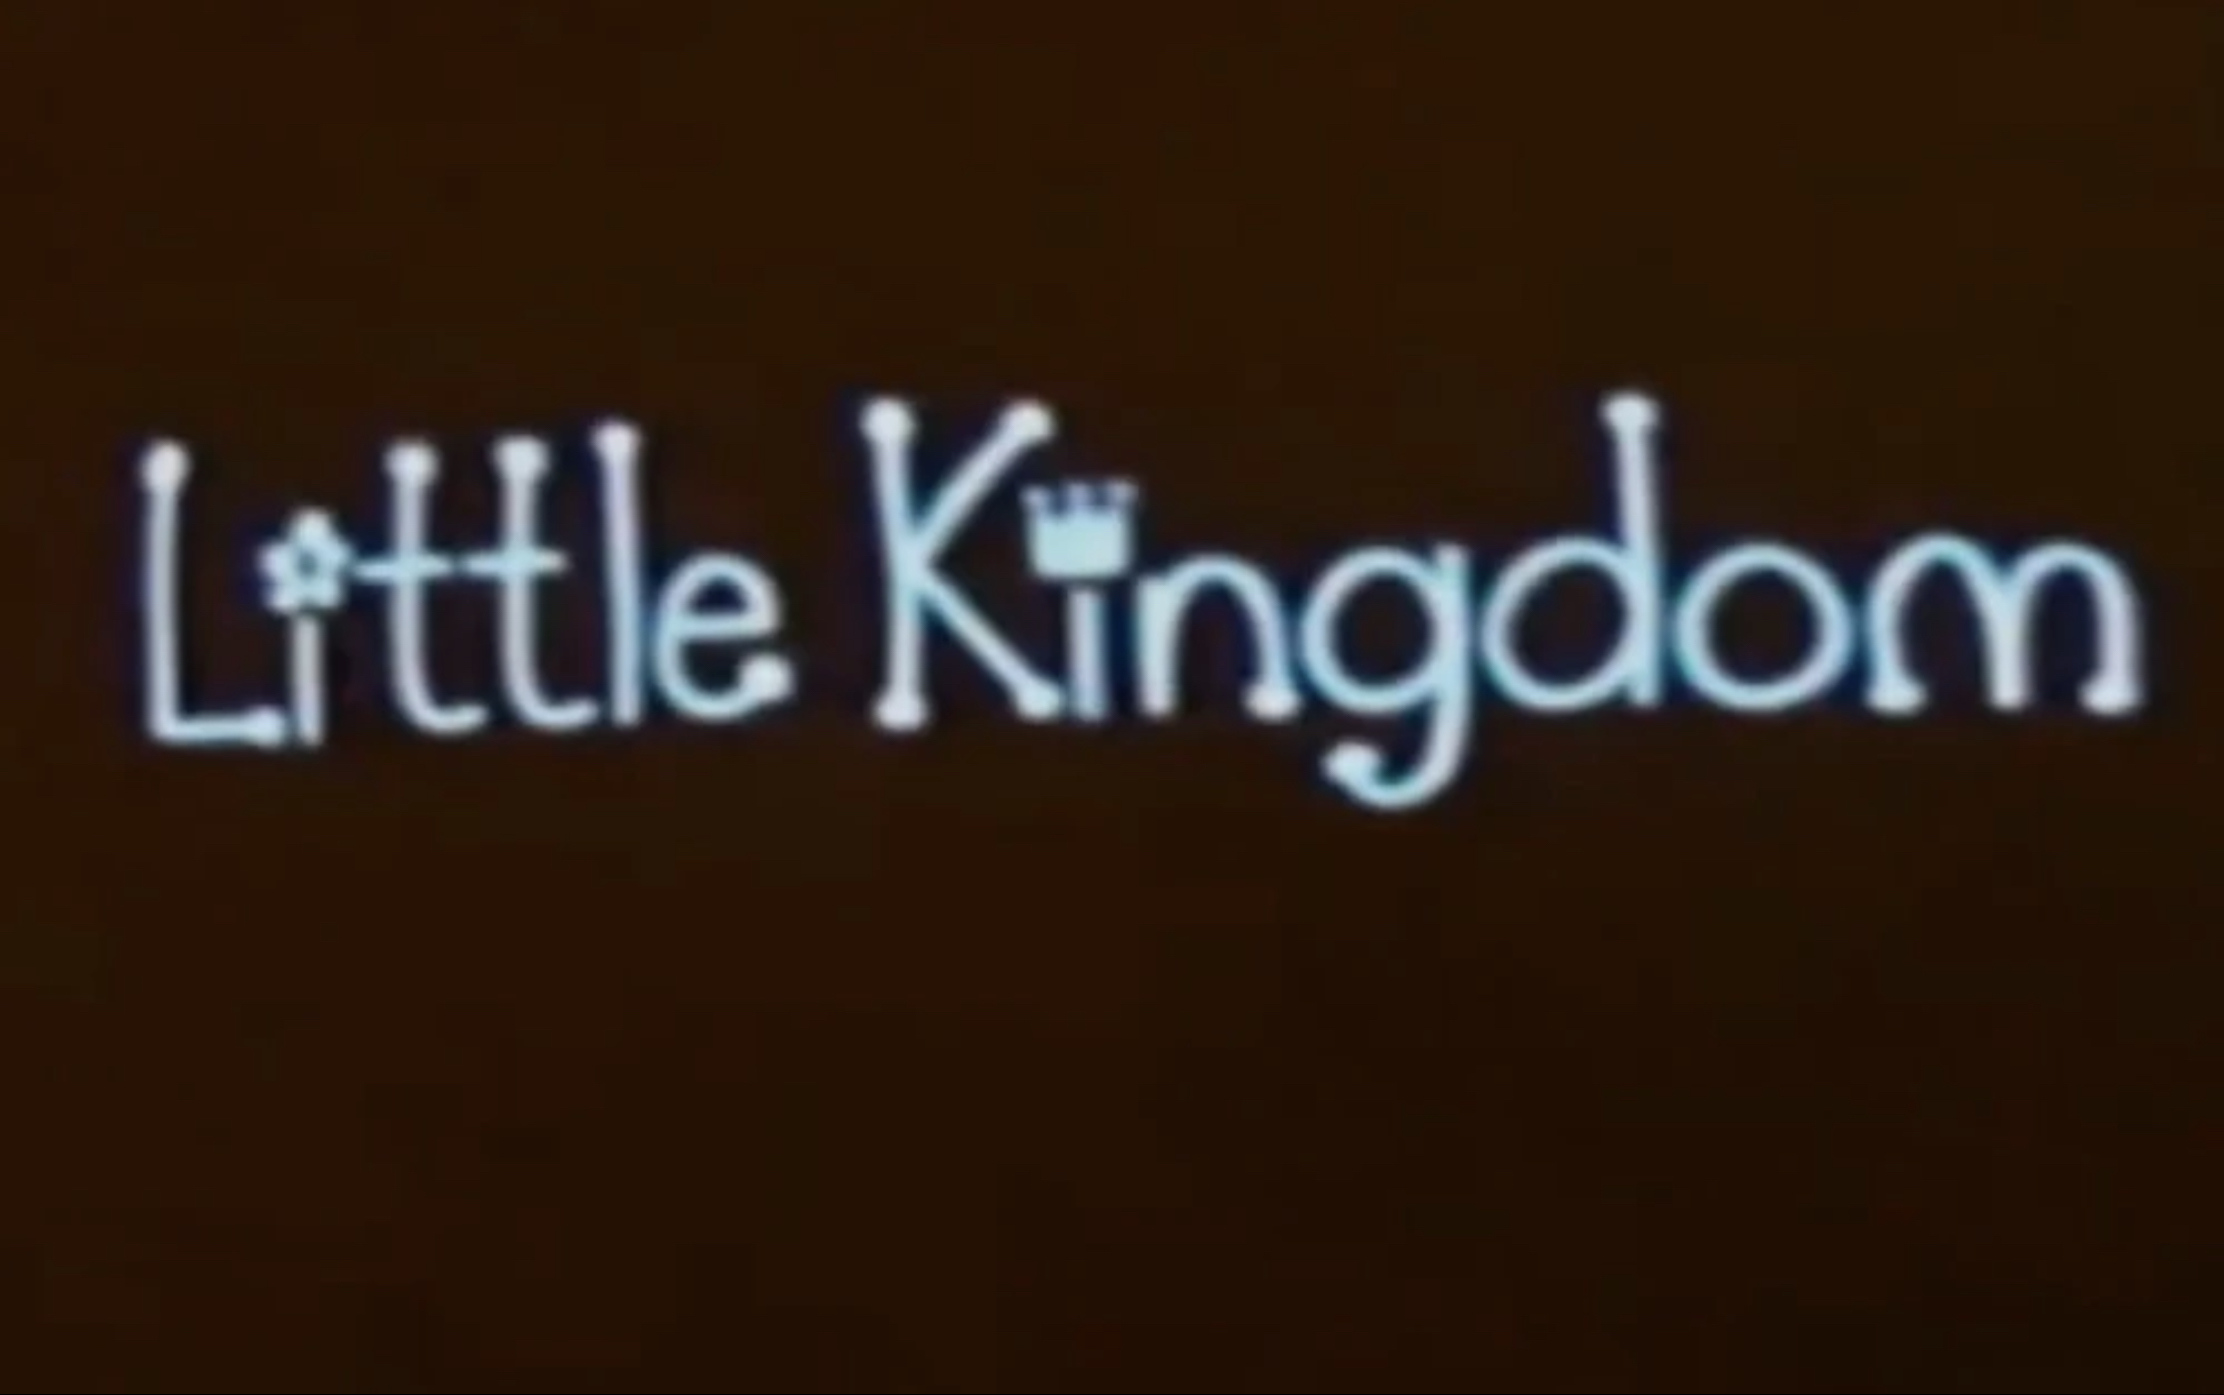 Little kingdom pilot logo.jpeg